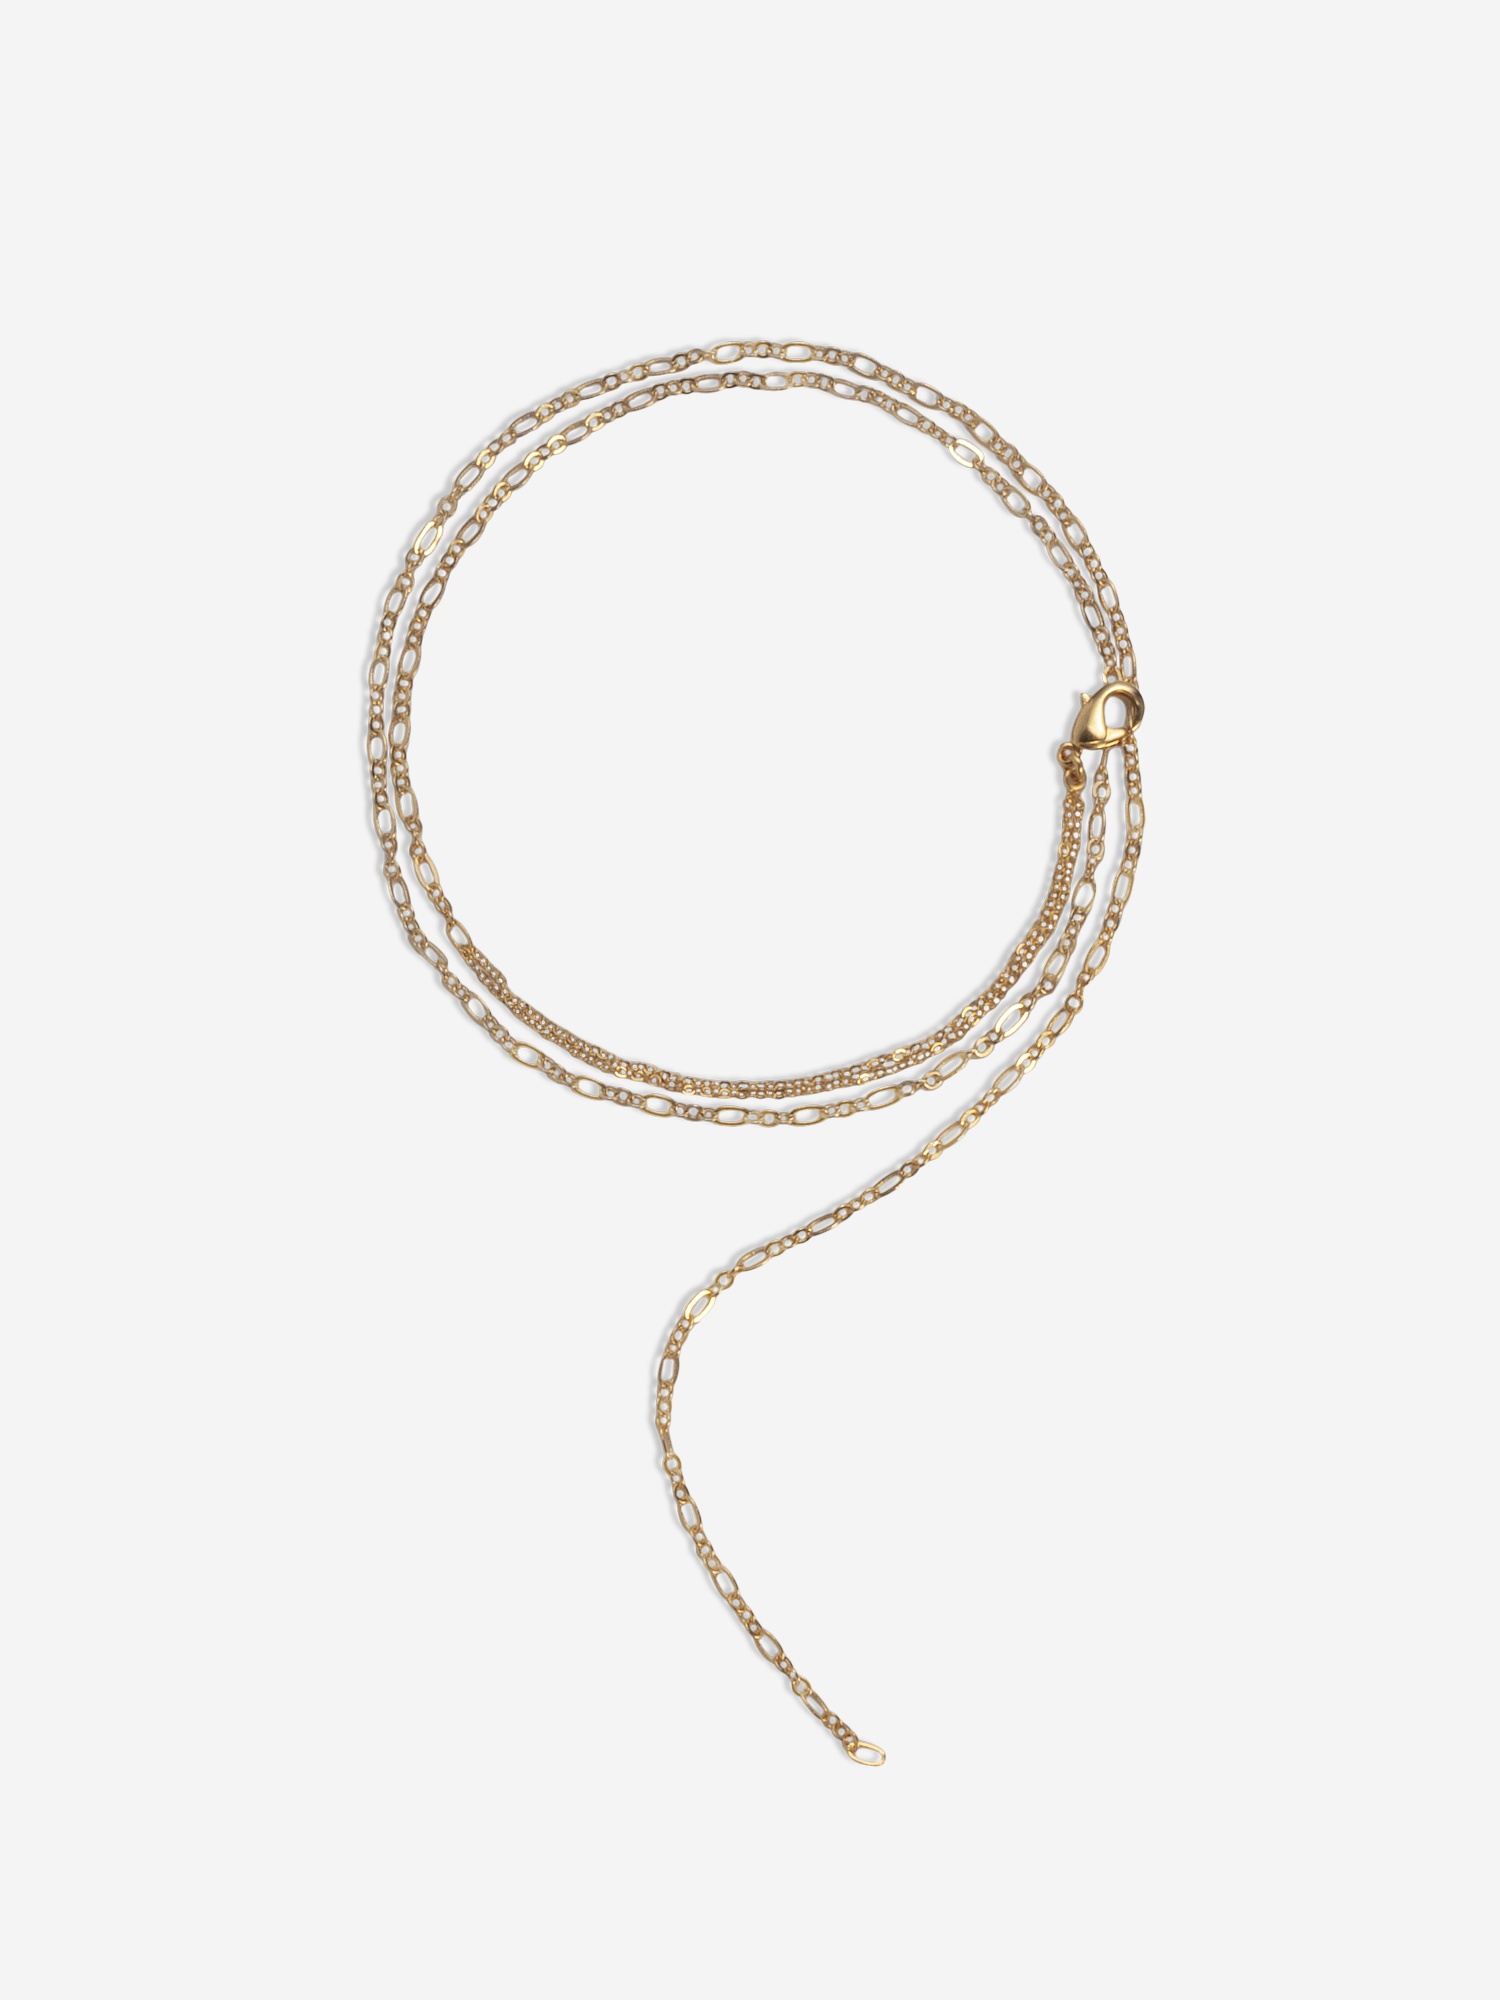 Juste Necklace / Bracelet Gold